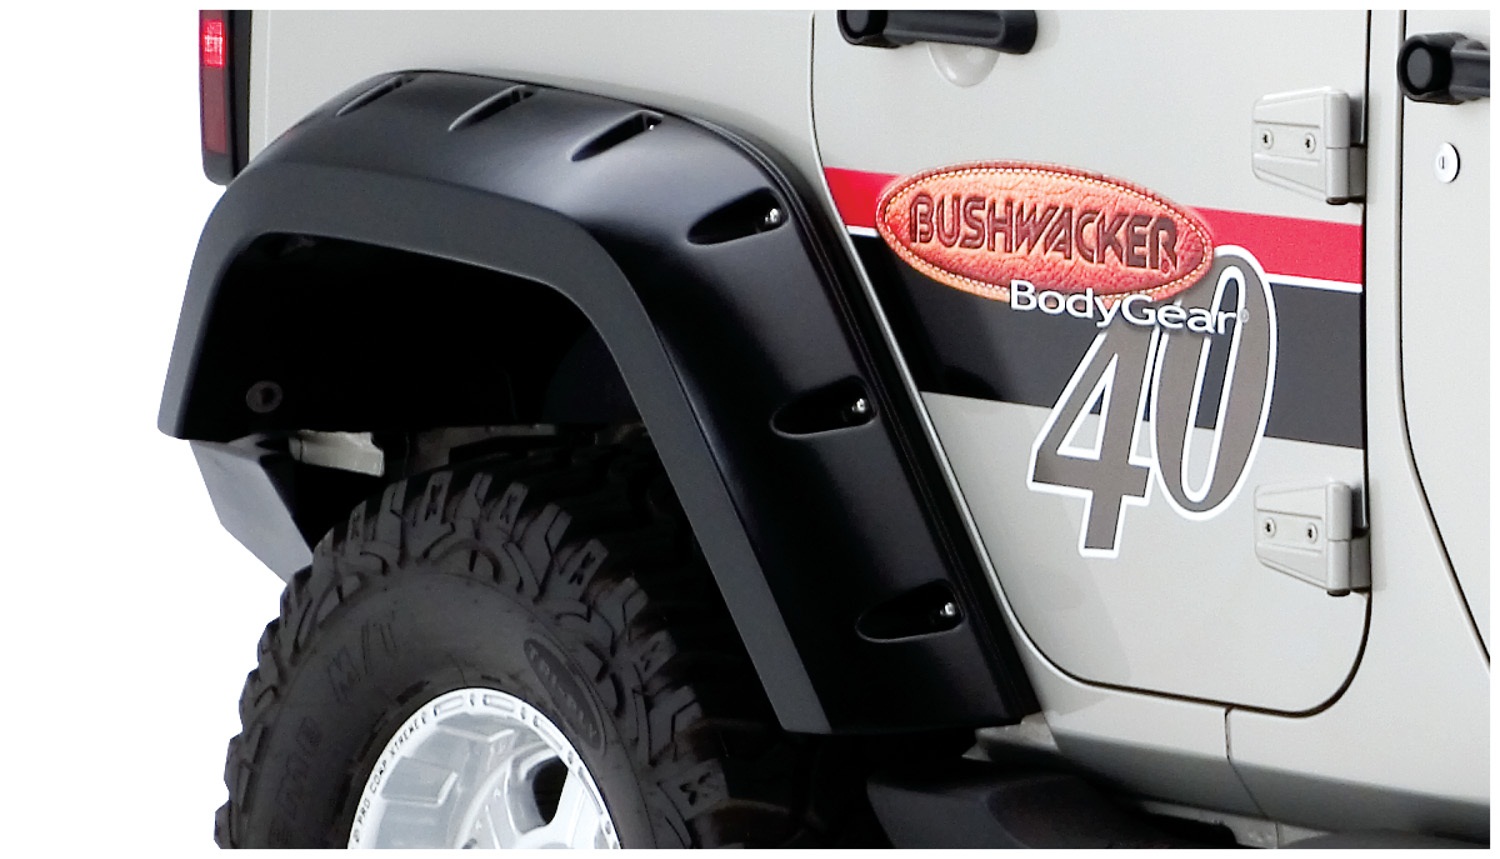 Bushwacker 10044-02 Black Max Coverage Pocket/Rivet Style Smooth Finish Rear Fender Flares with Extended Coverage for 2007-2018 Jeep Wrangler JK Unlimited 4-Door